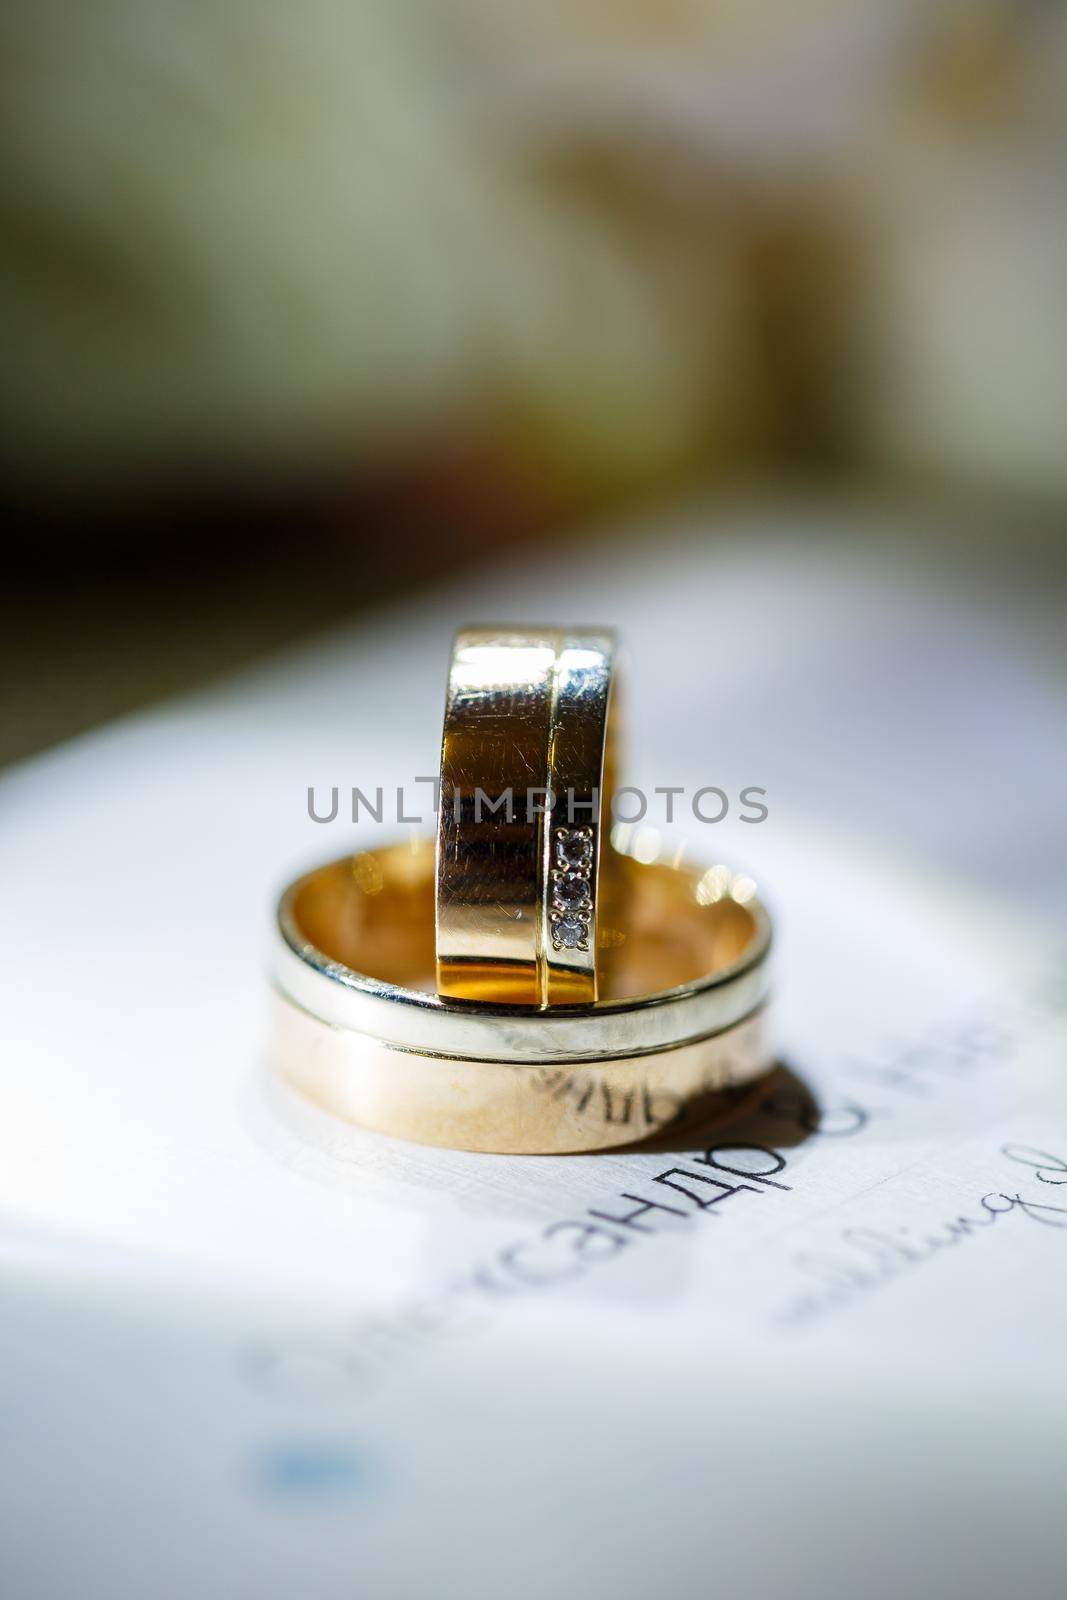 Gold wedding rings for newlyweds on wedding day by Dmitrytph